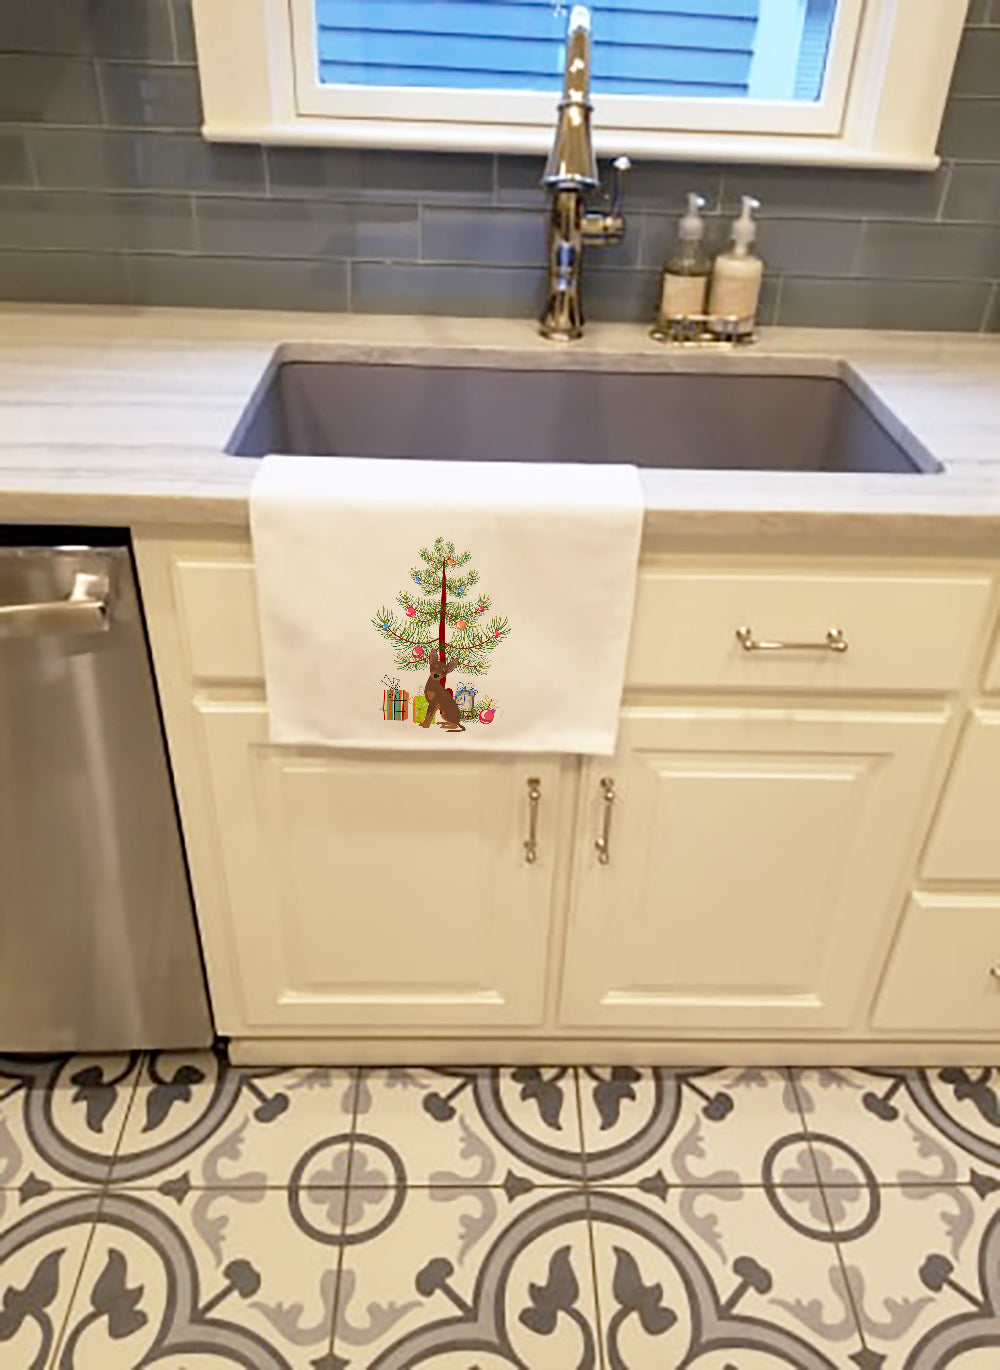 Buy this Brown Prague Ratter Christmas Tree White Kitchen Towel Set of 2